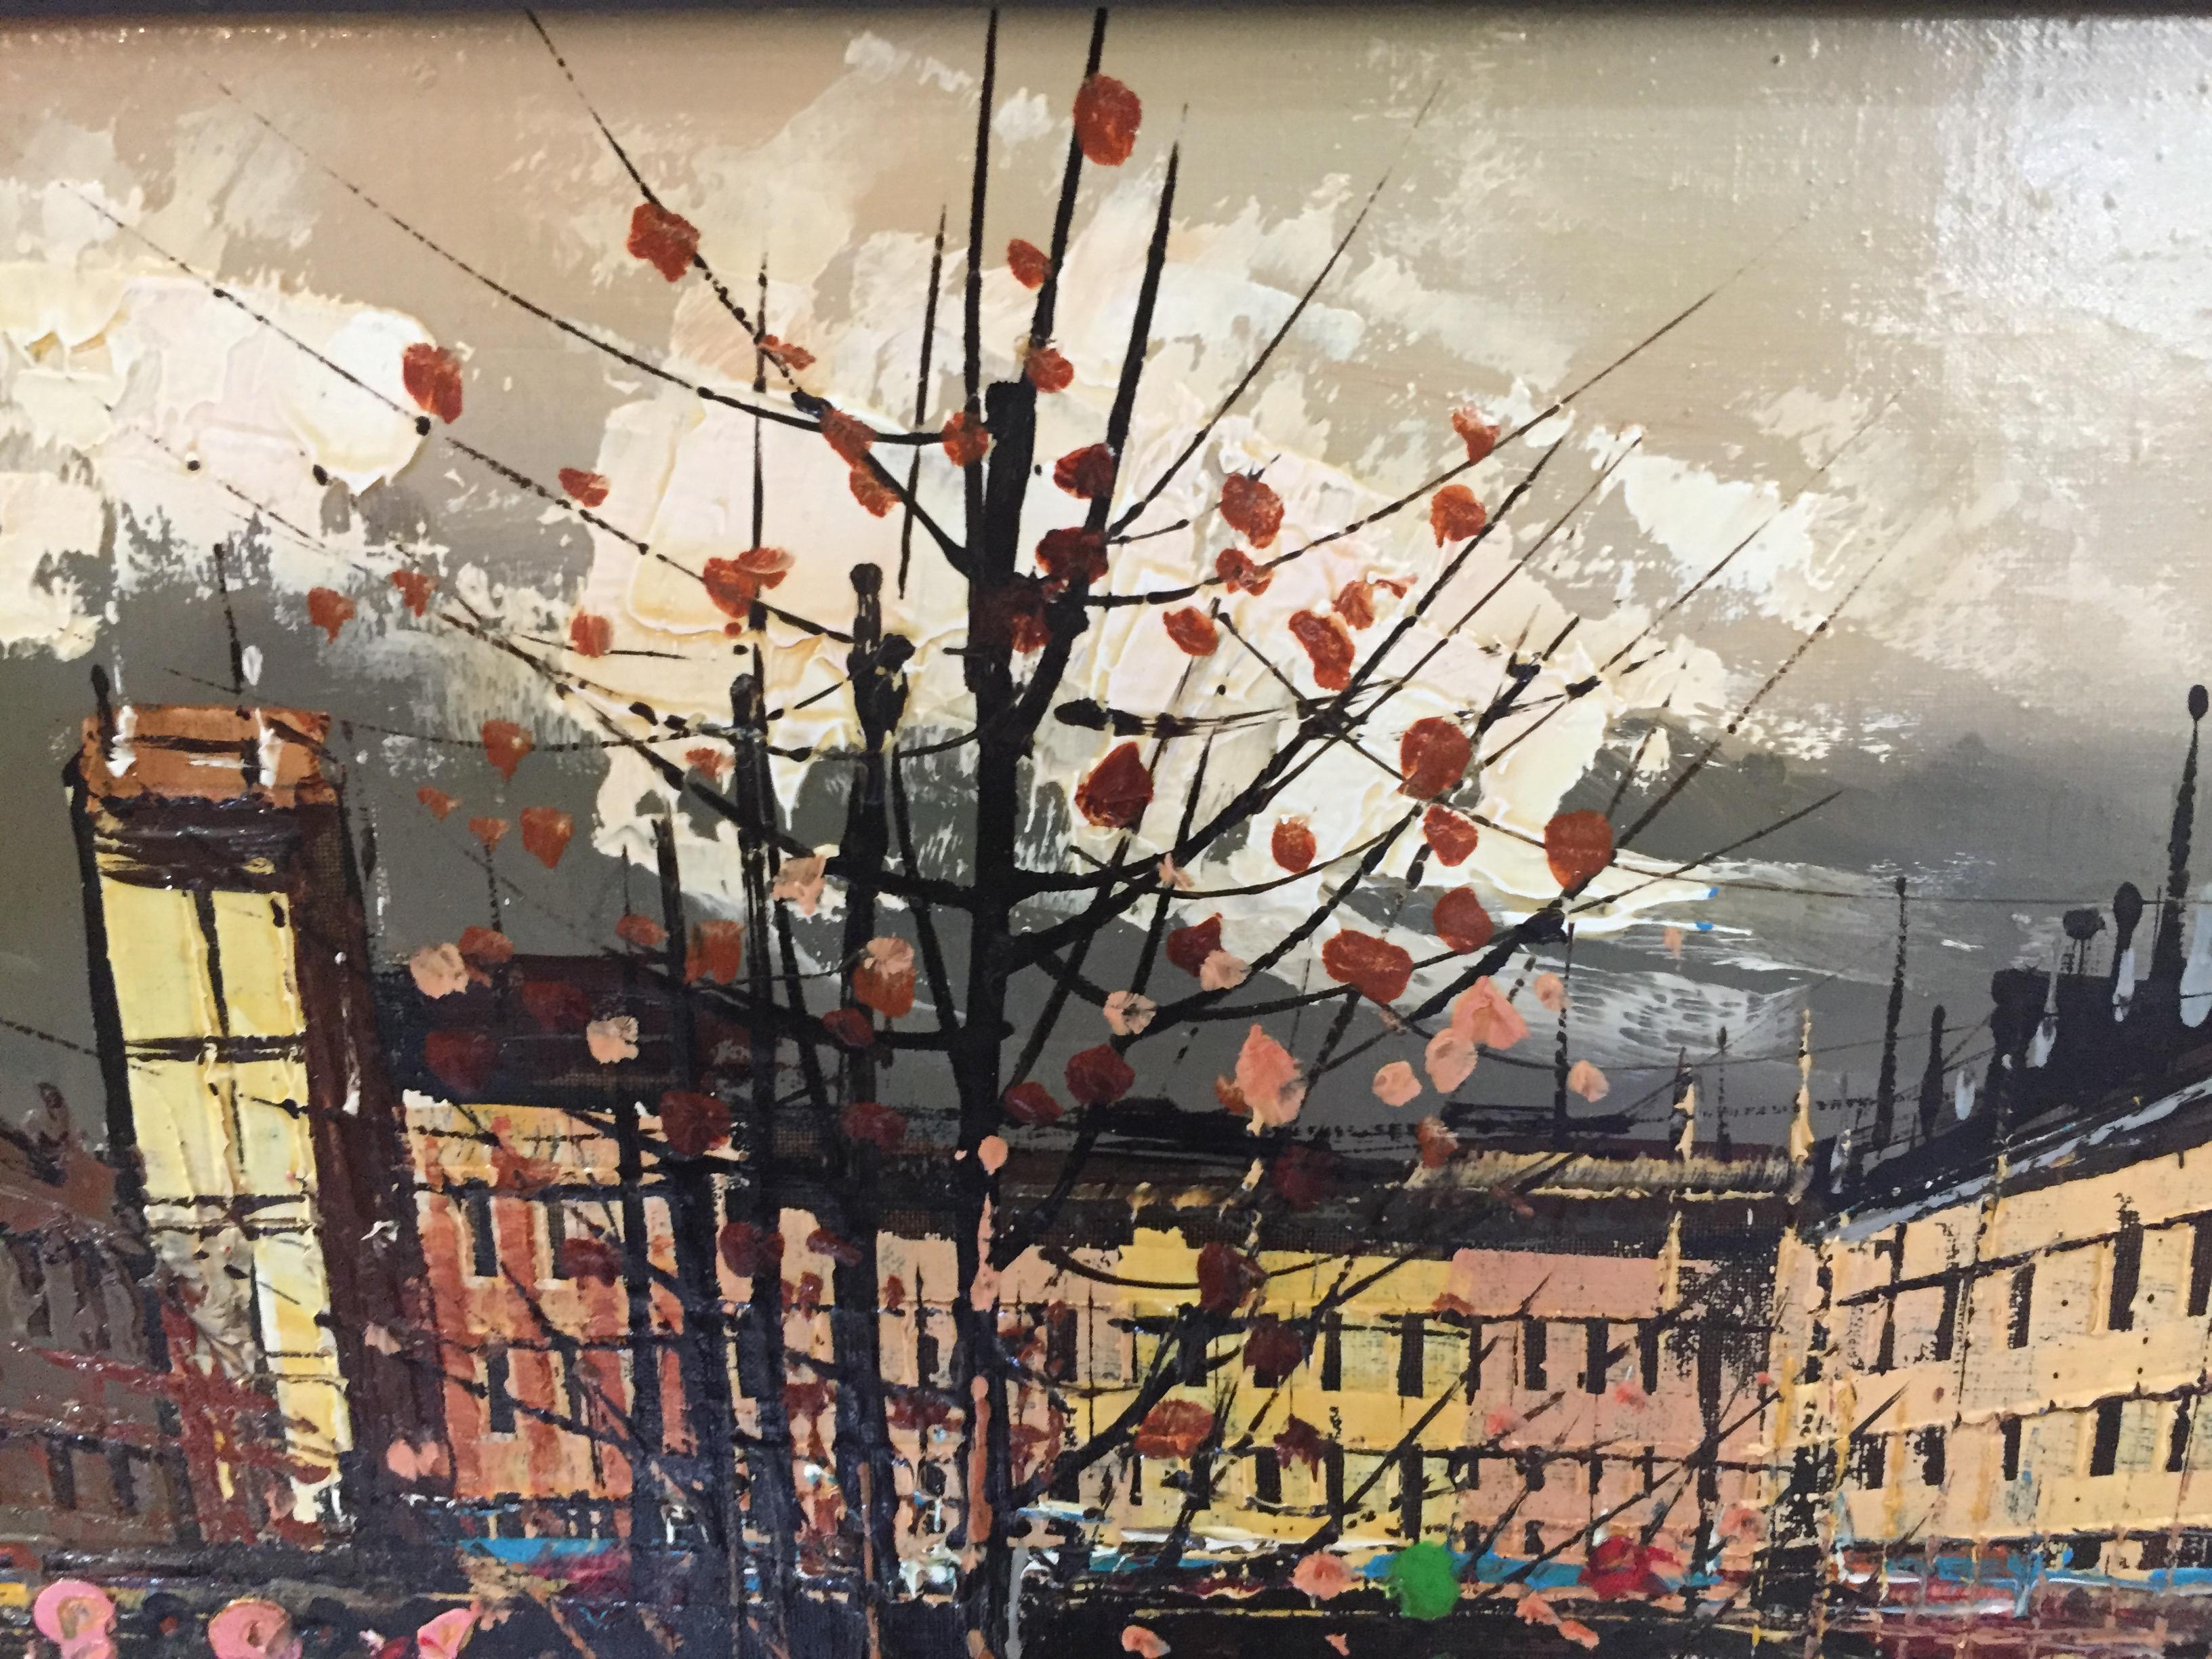 Brushed Pair of European Street Scenes Paintings 1950s by Listed Artist Ninetti